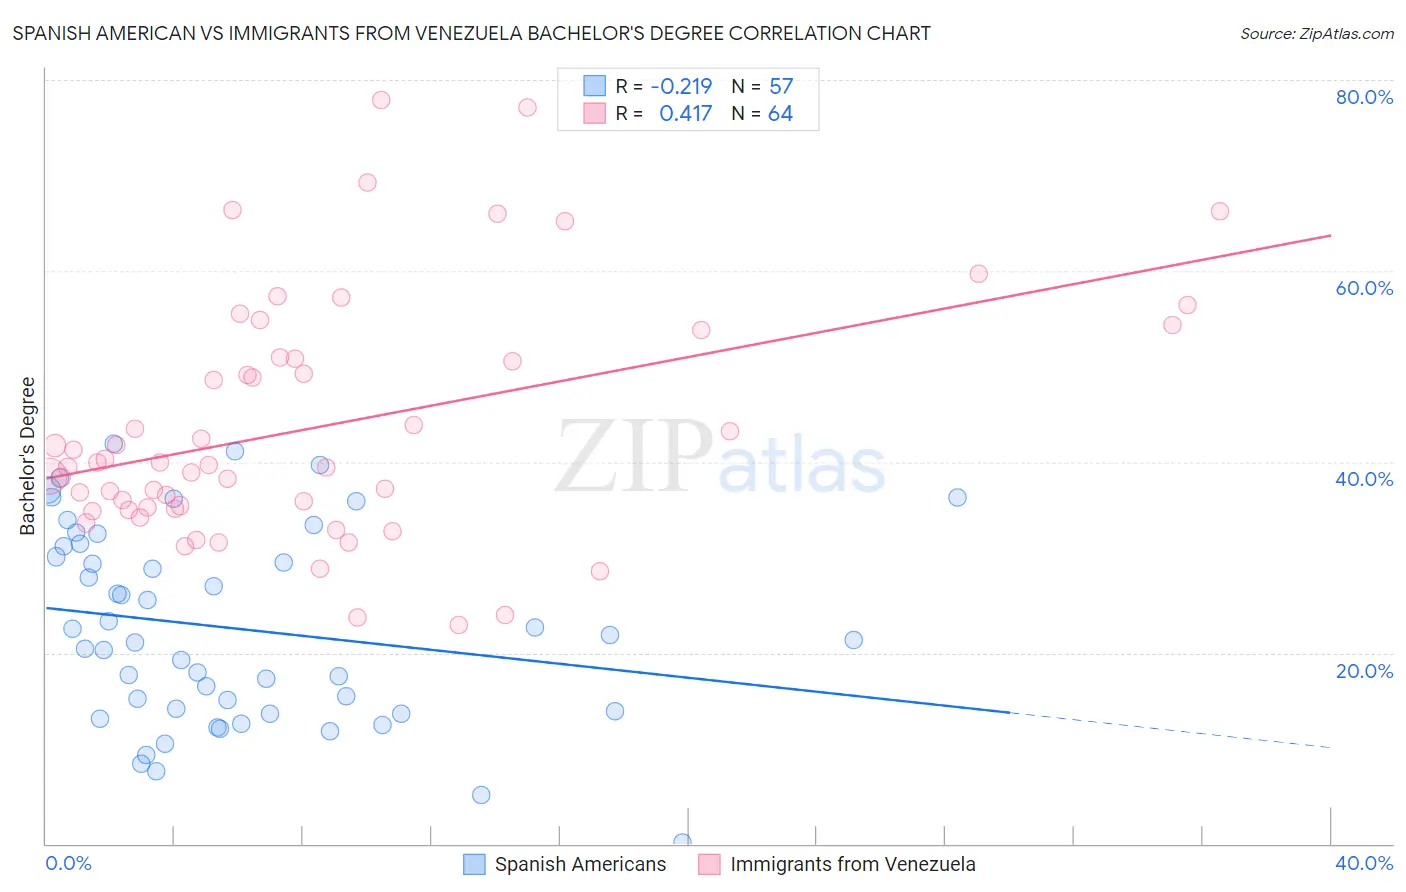 Spanish American vs Immigrants from Venezuela Bachelor's Degree